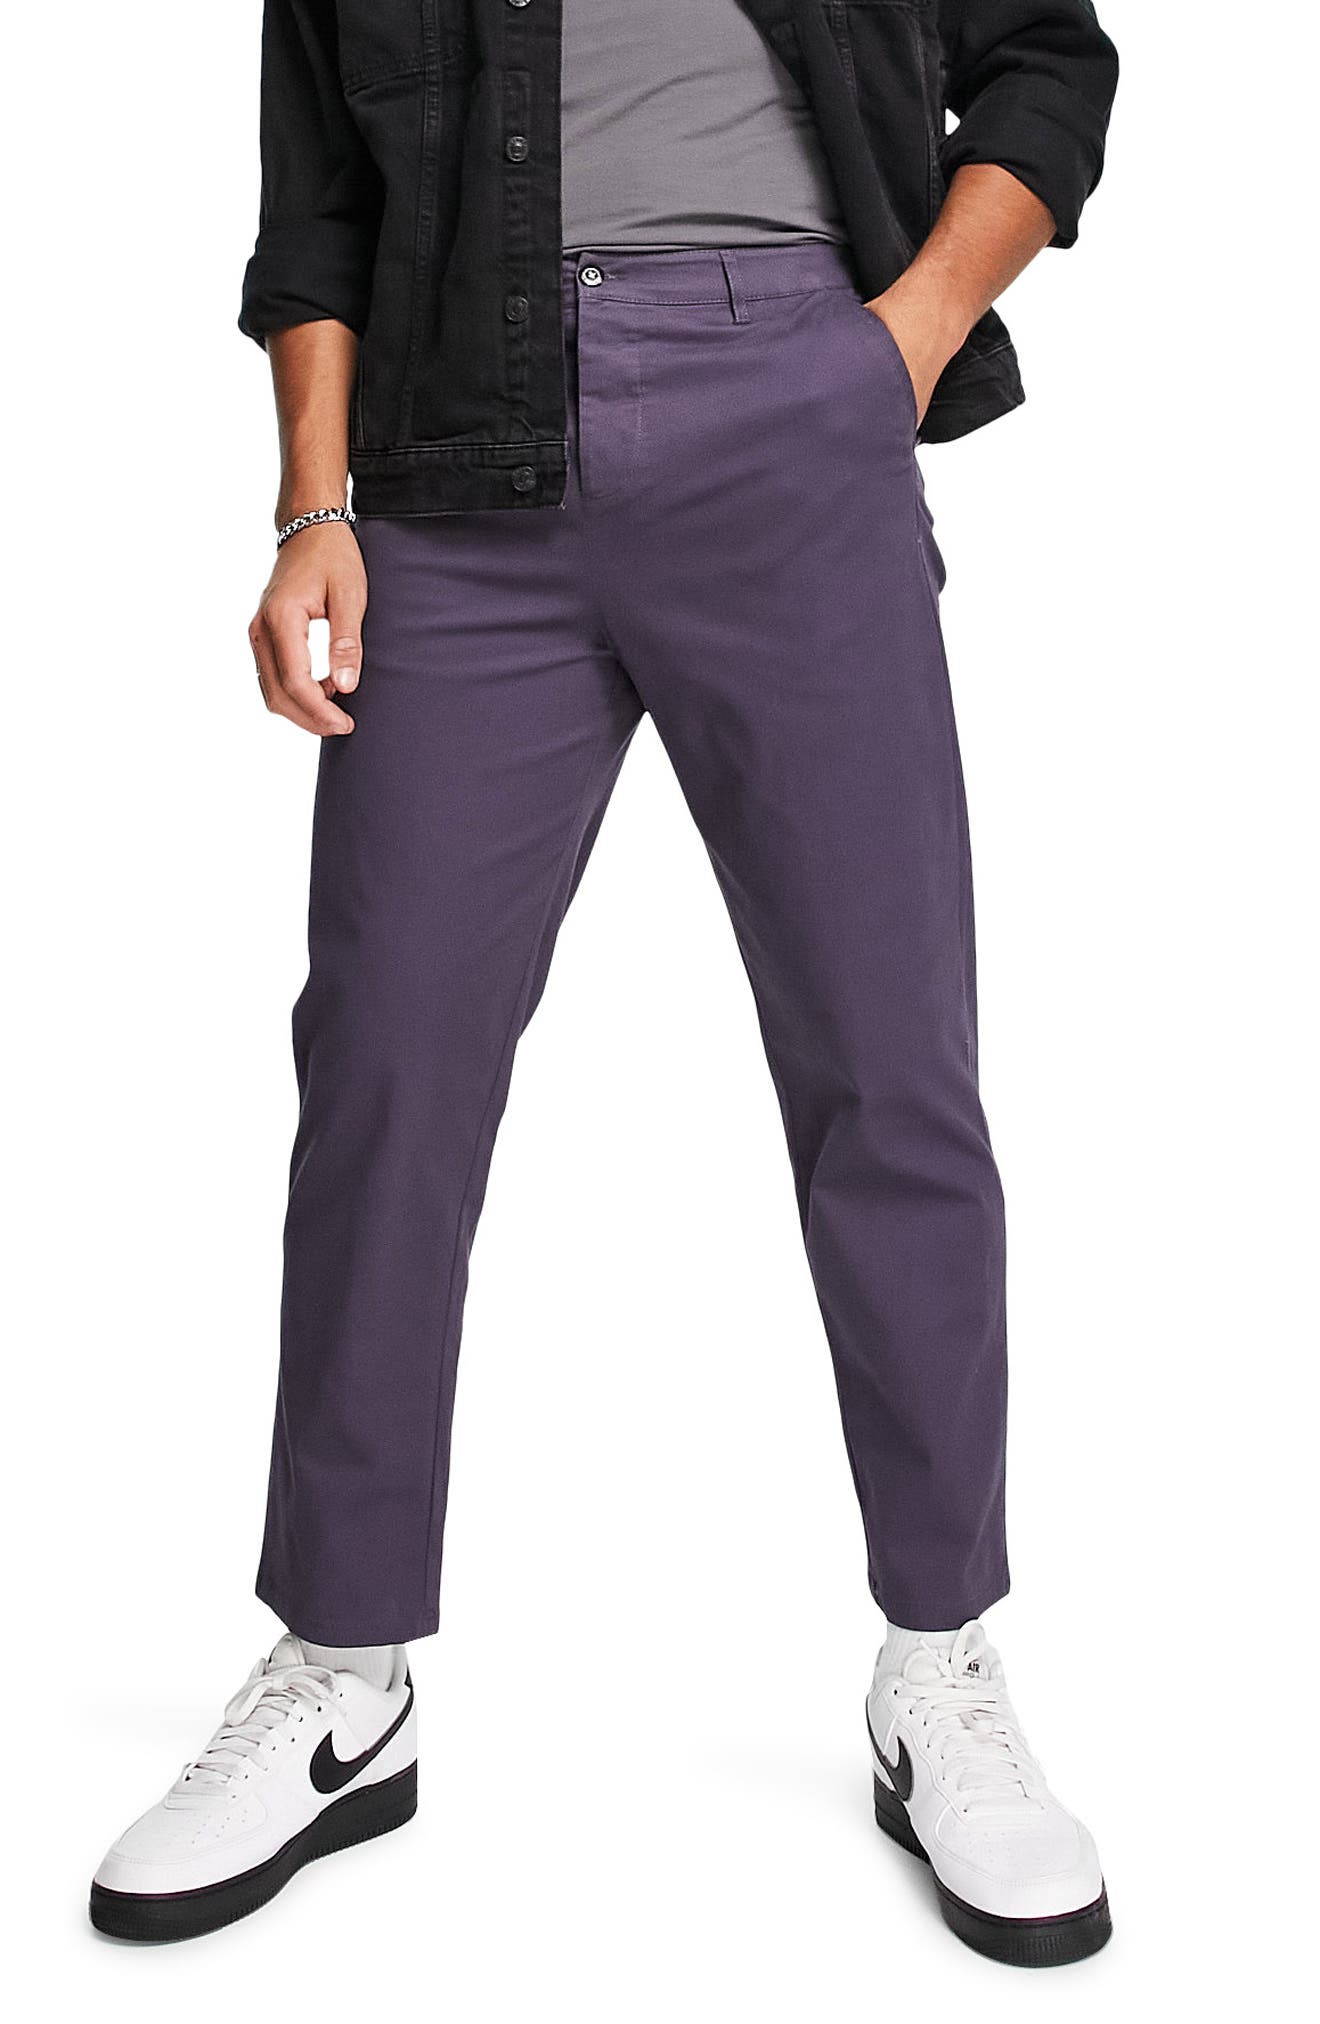 for Men Eleventy Synthetic Trouser in Deep Purple Slacks and Chinos Eleventy Trousers Slacks and Chinos Mens Trousers Purple 